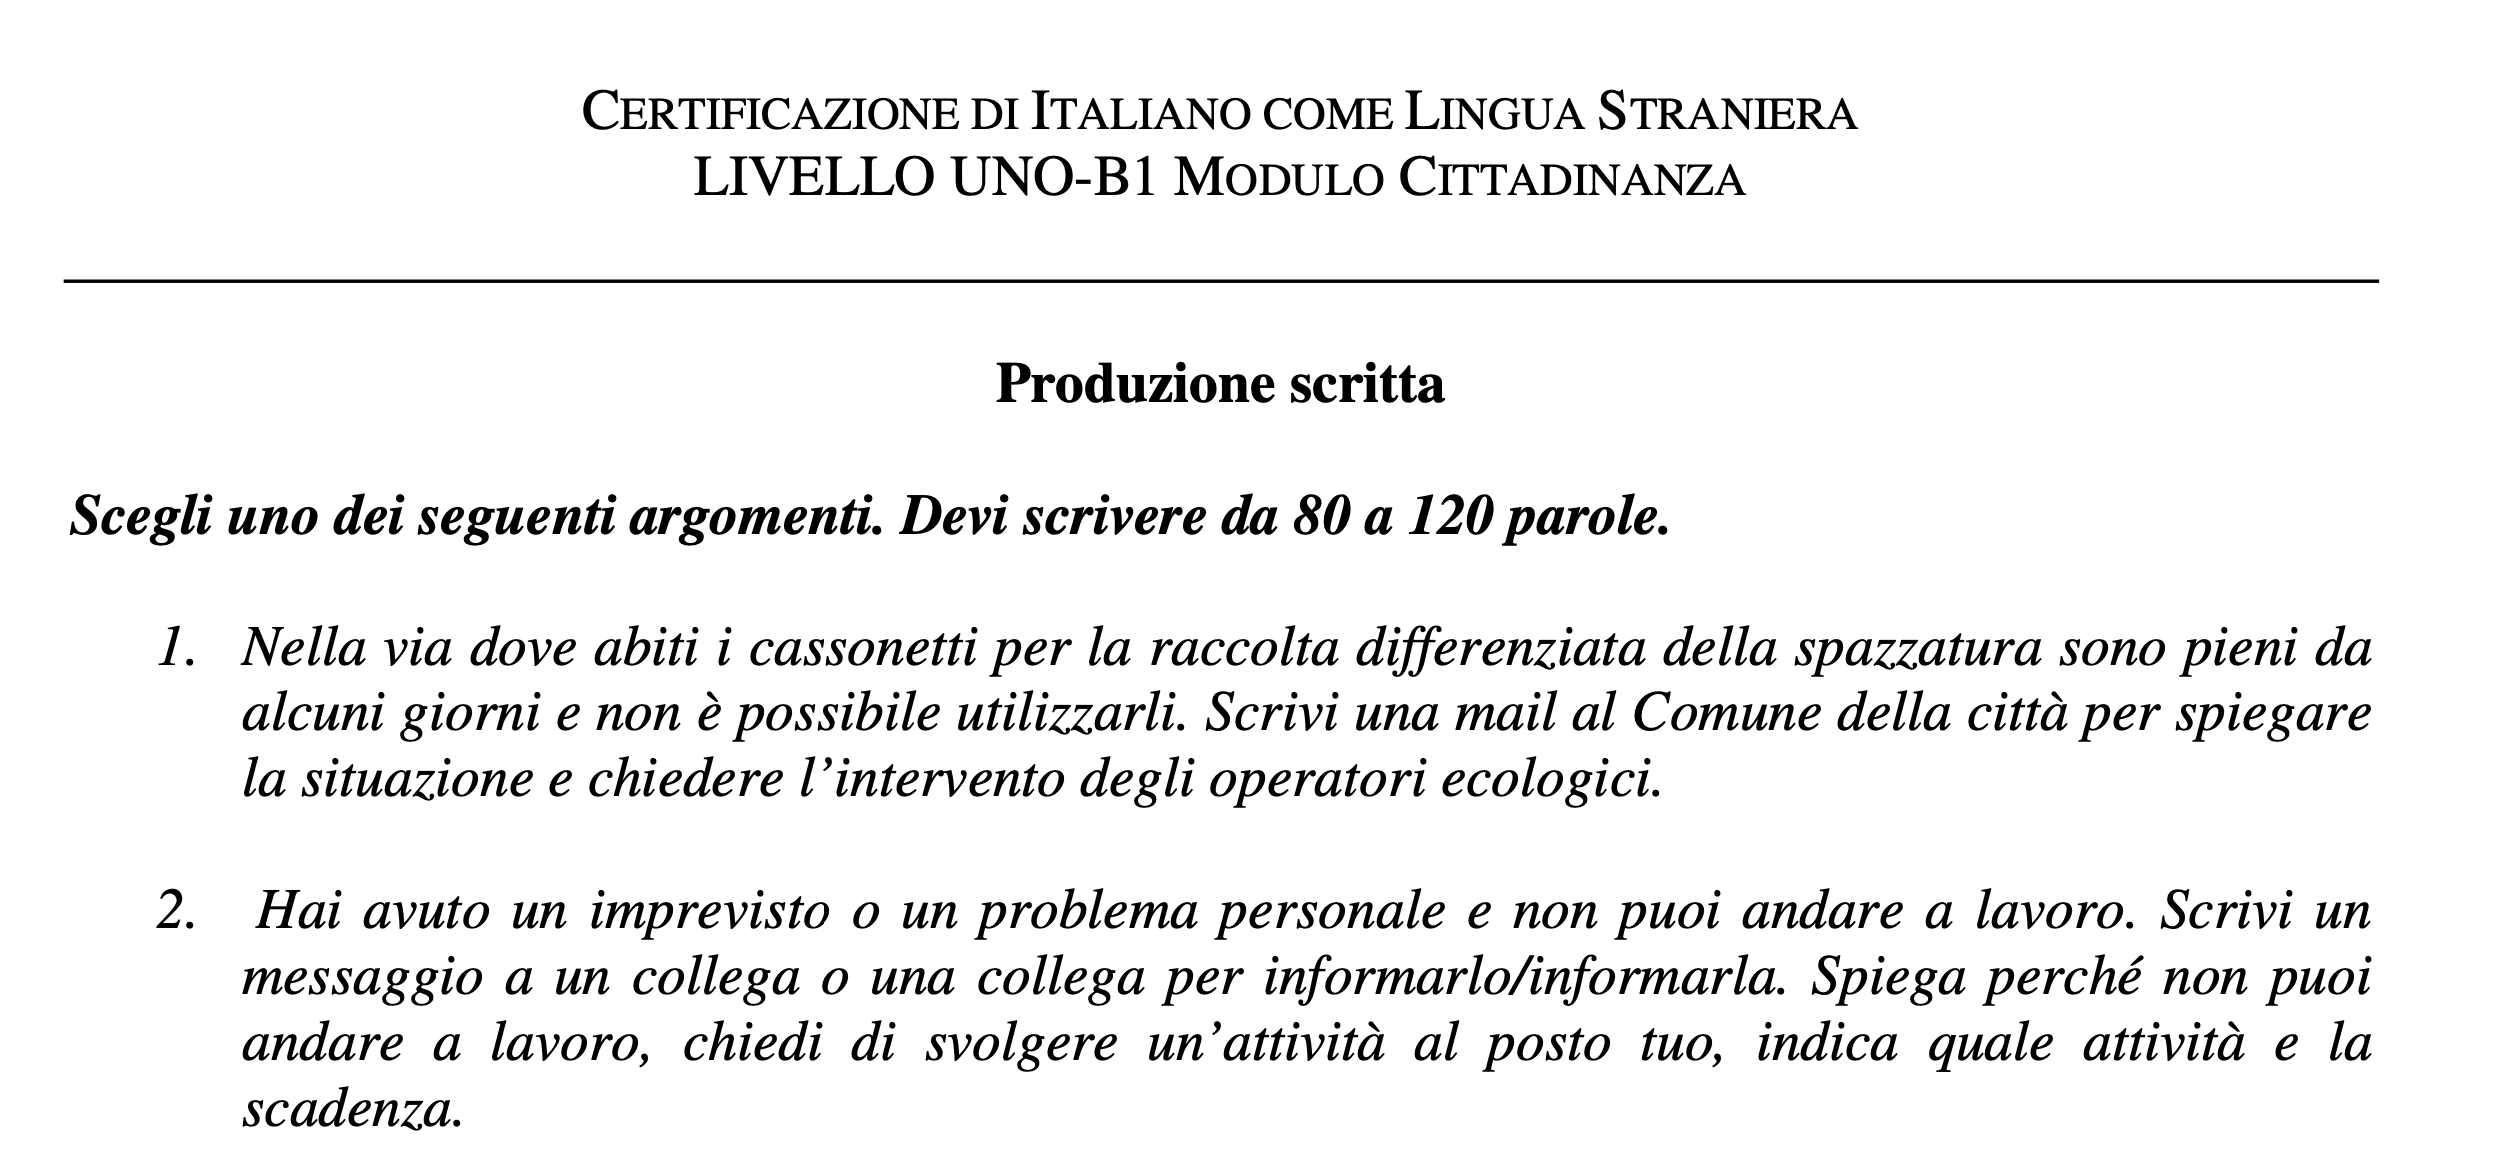 CILS B1 Cittadinanza (Citizenship): Writing Part - Smart Italian Learning